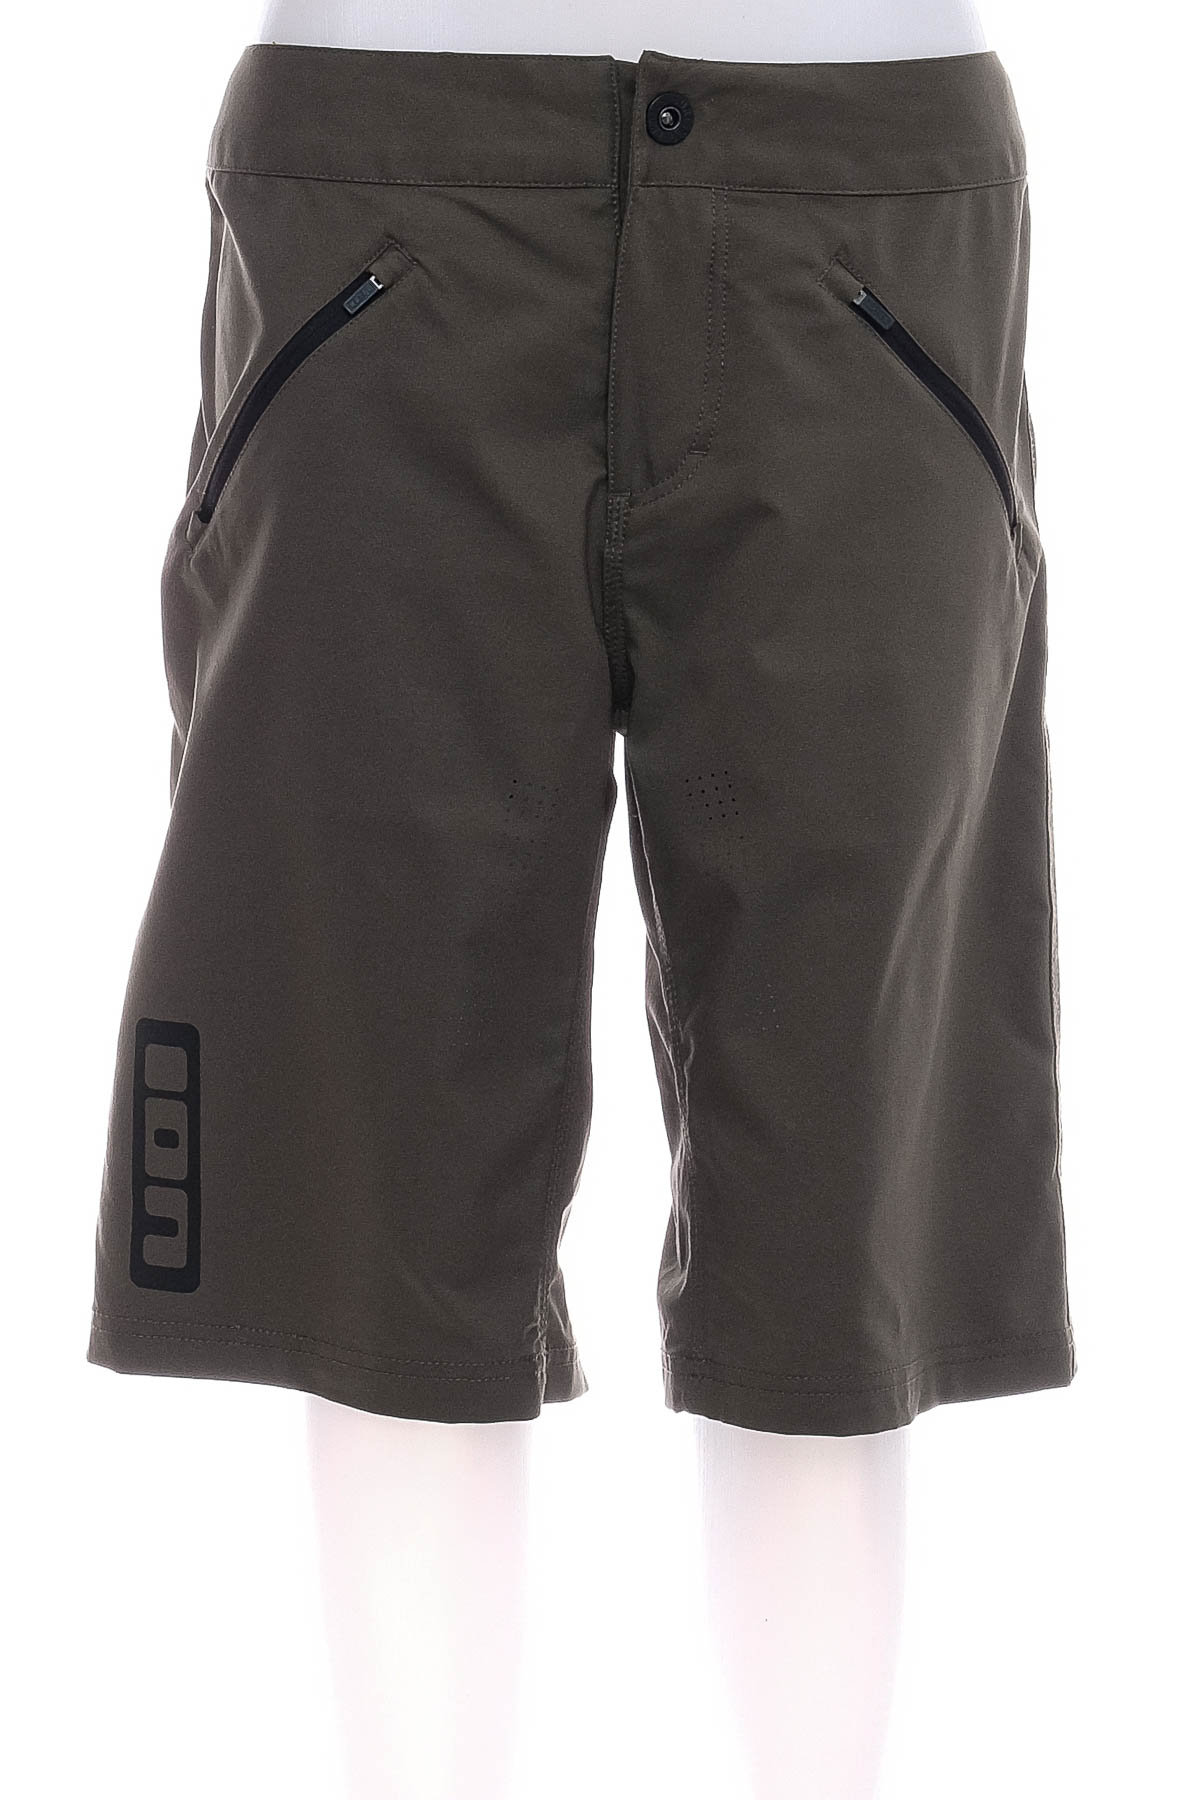 Men's shorts - ION - 0